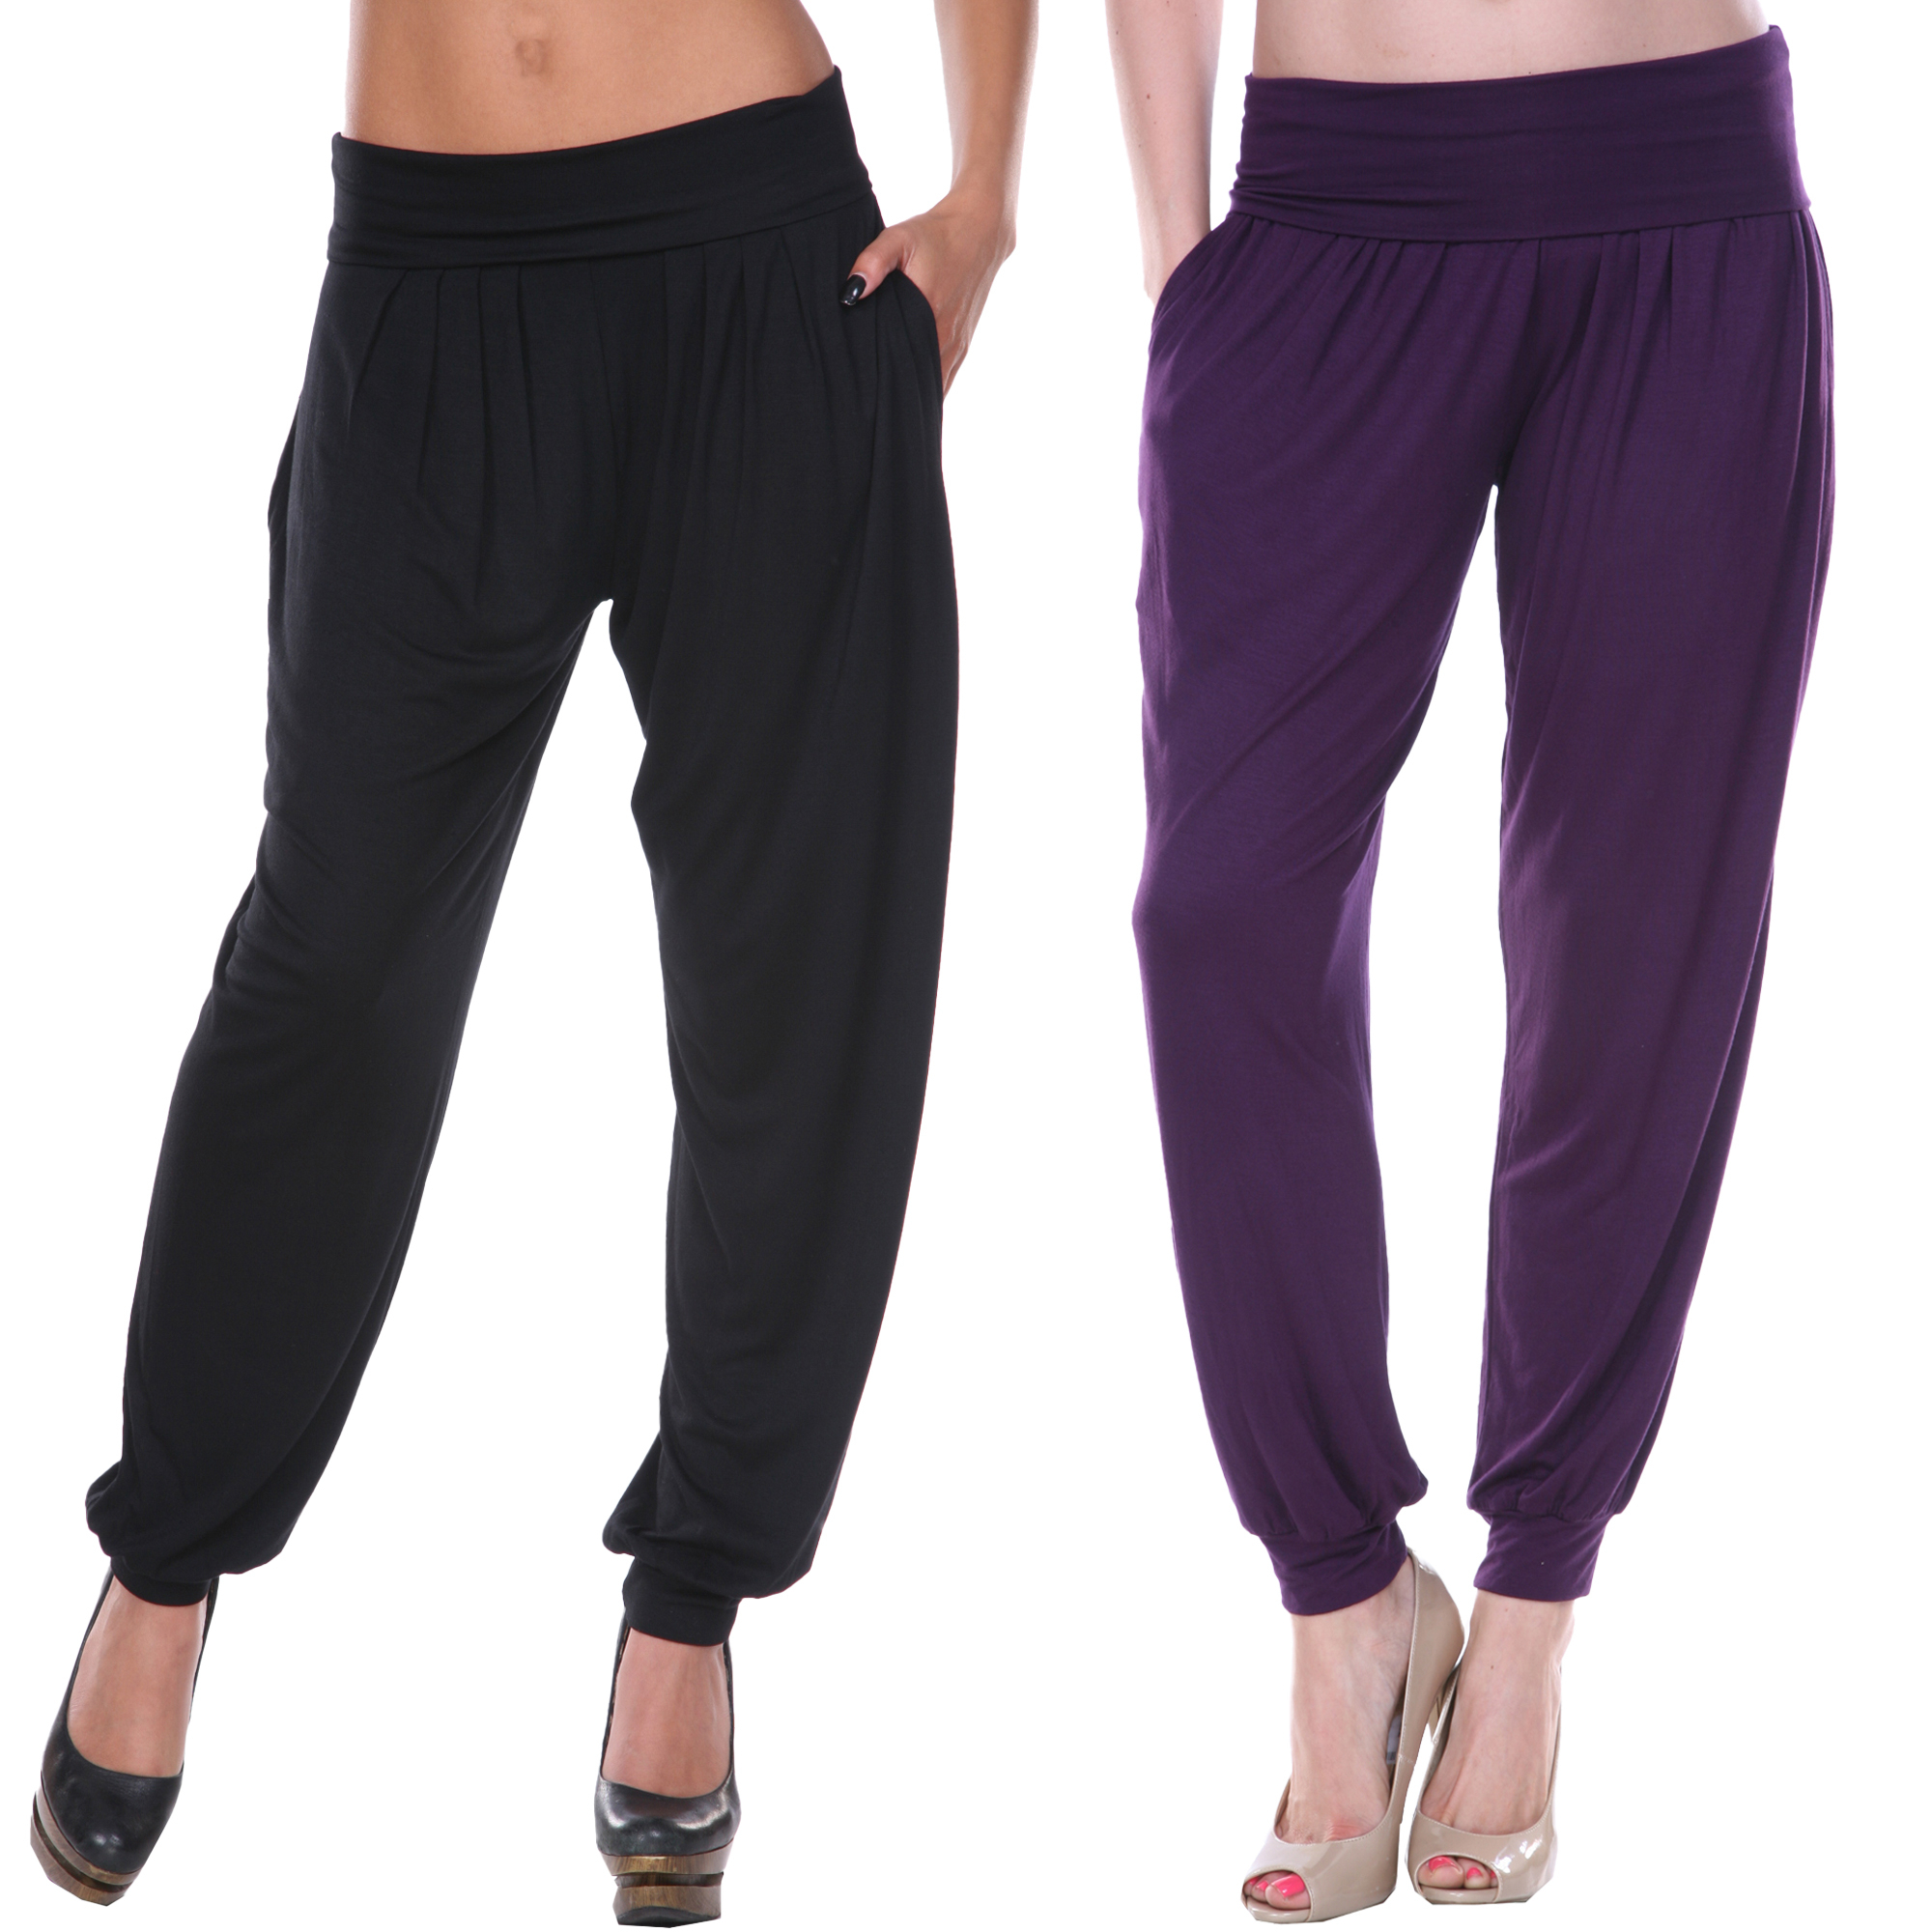 White Mark Women's 2-Pack High Waist Harem Pants - Black, Purple, X-Large